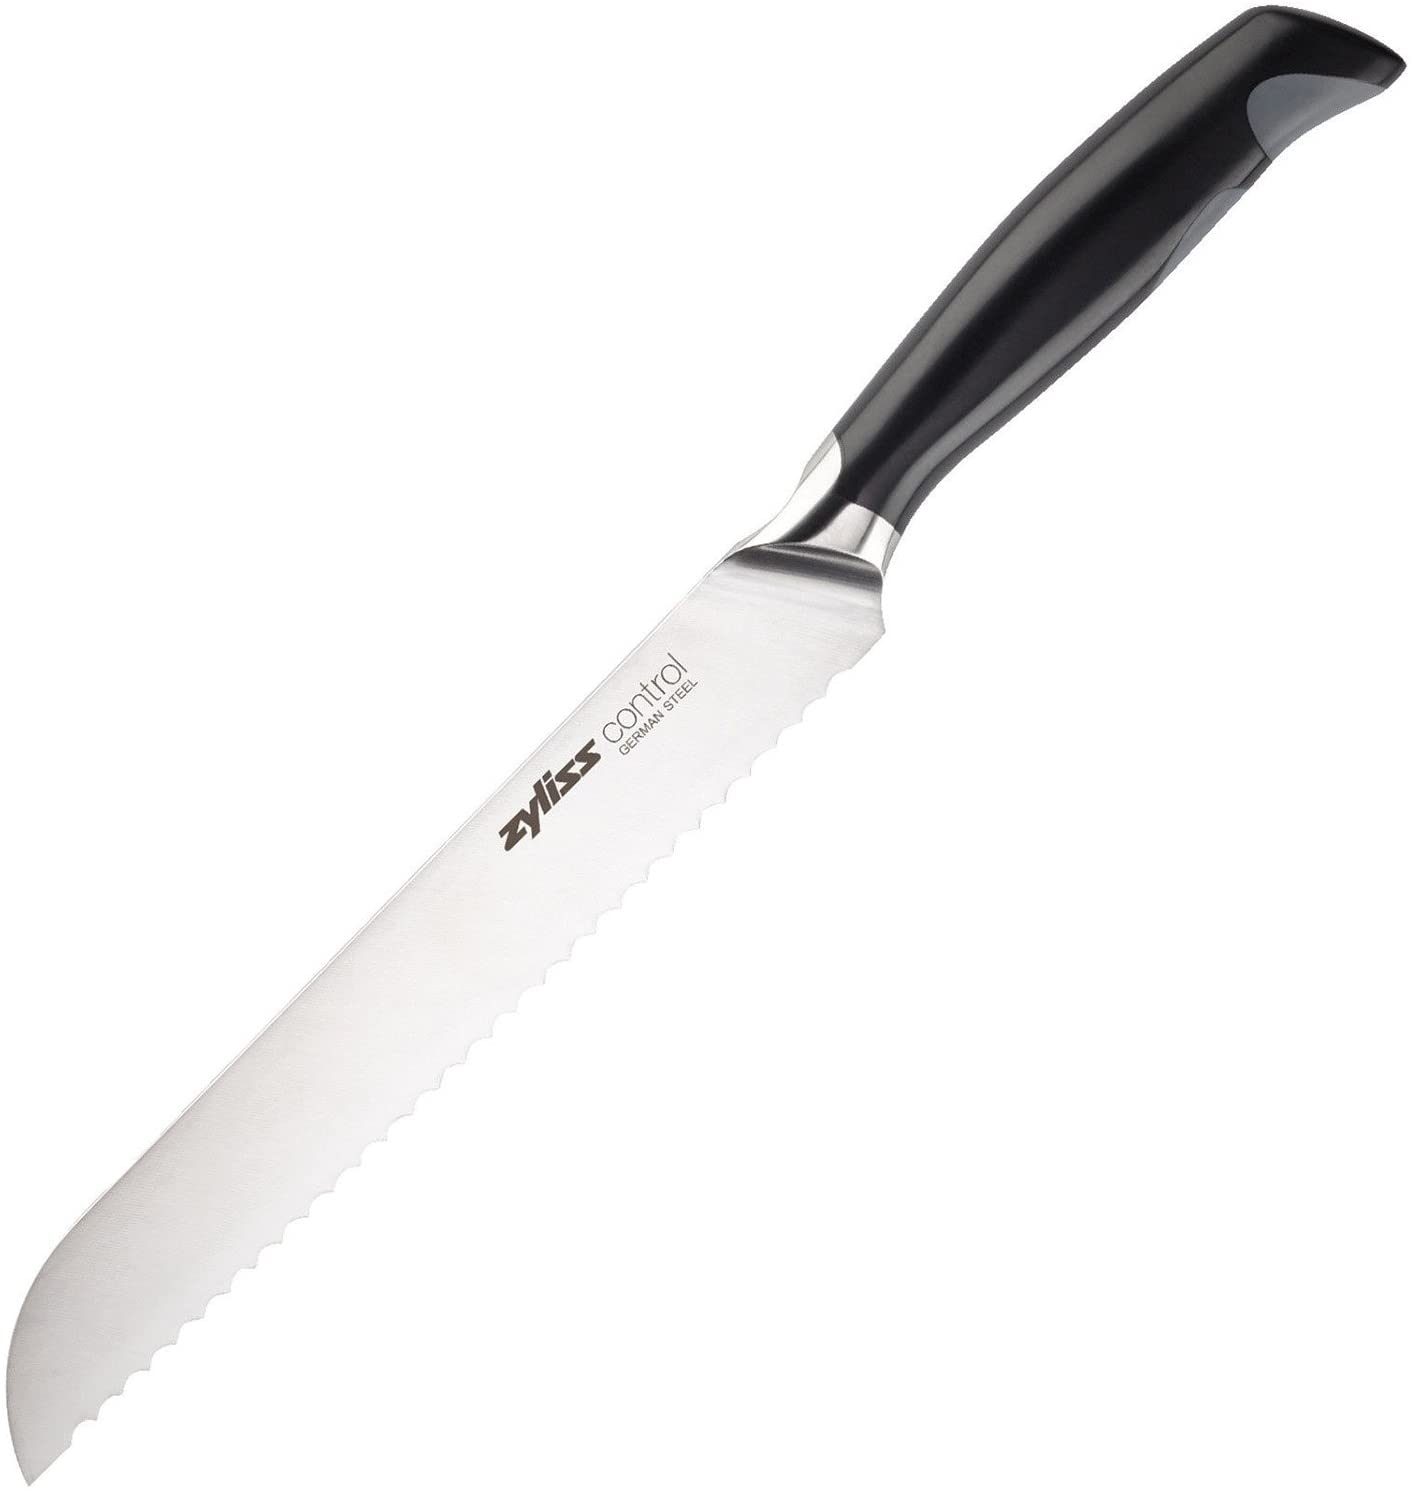 Zyliss E920178 \"Control\" Bread Knife, 20 cm Knife, Stainless Steel, Black, 36 x 3.5 x 2 cm